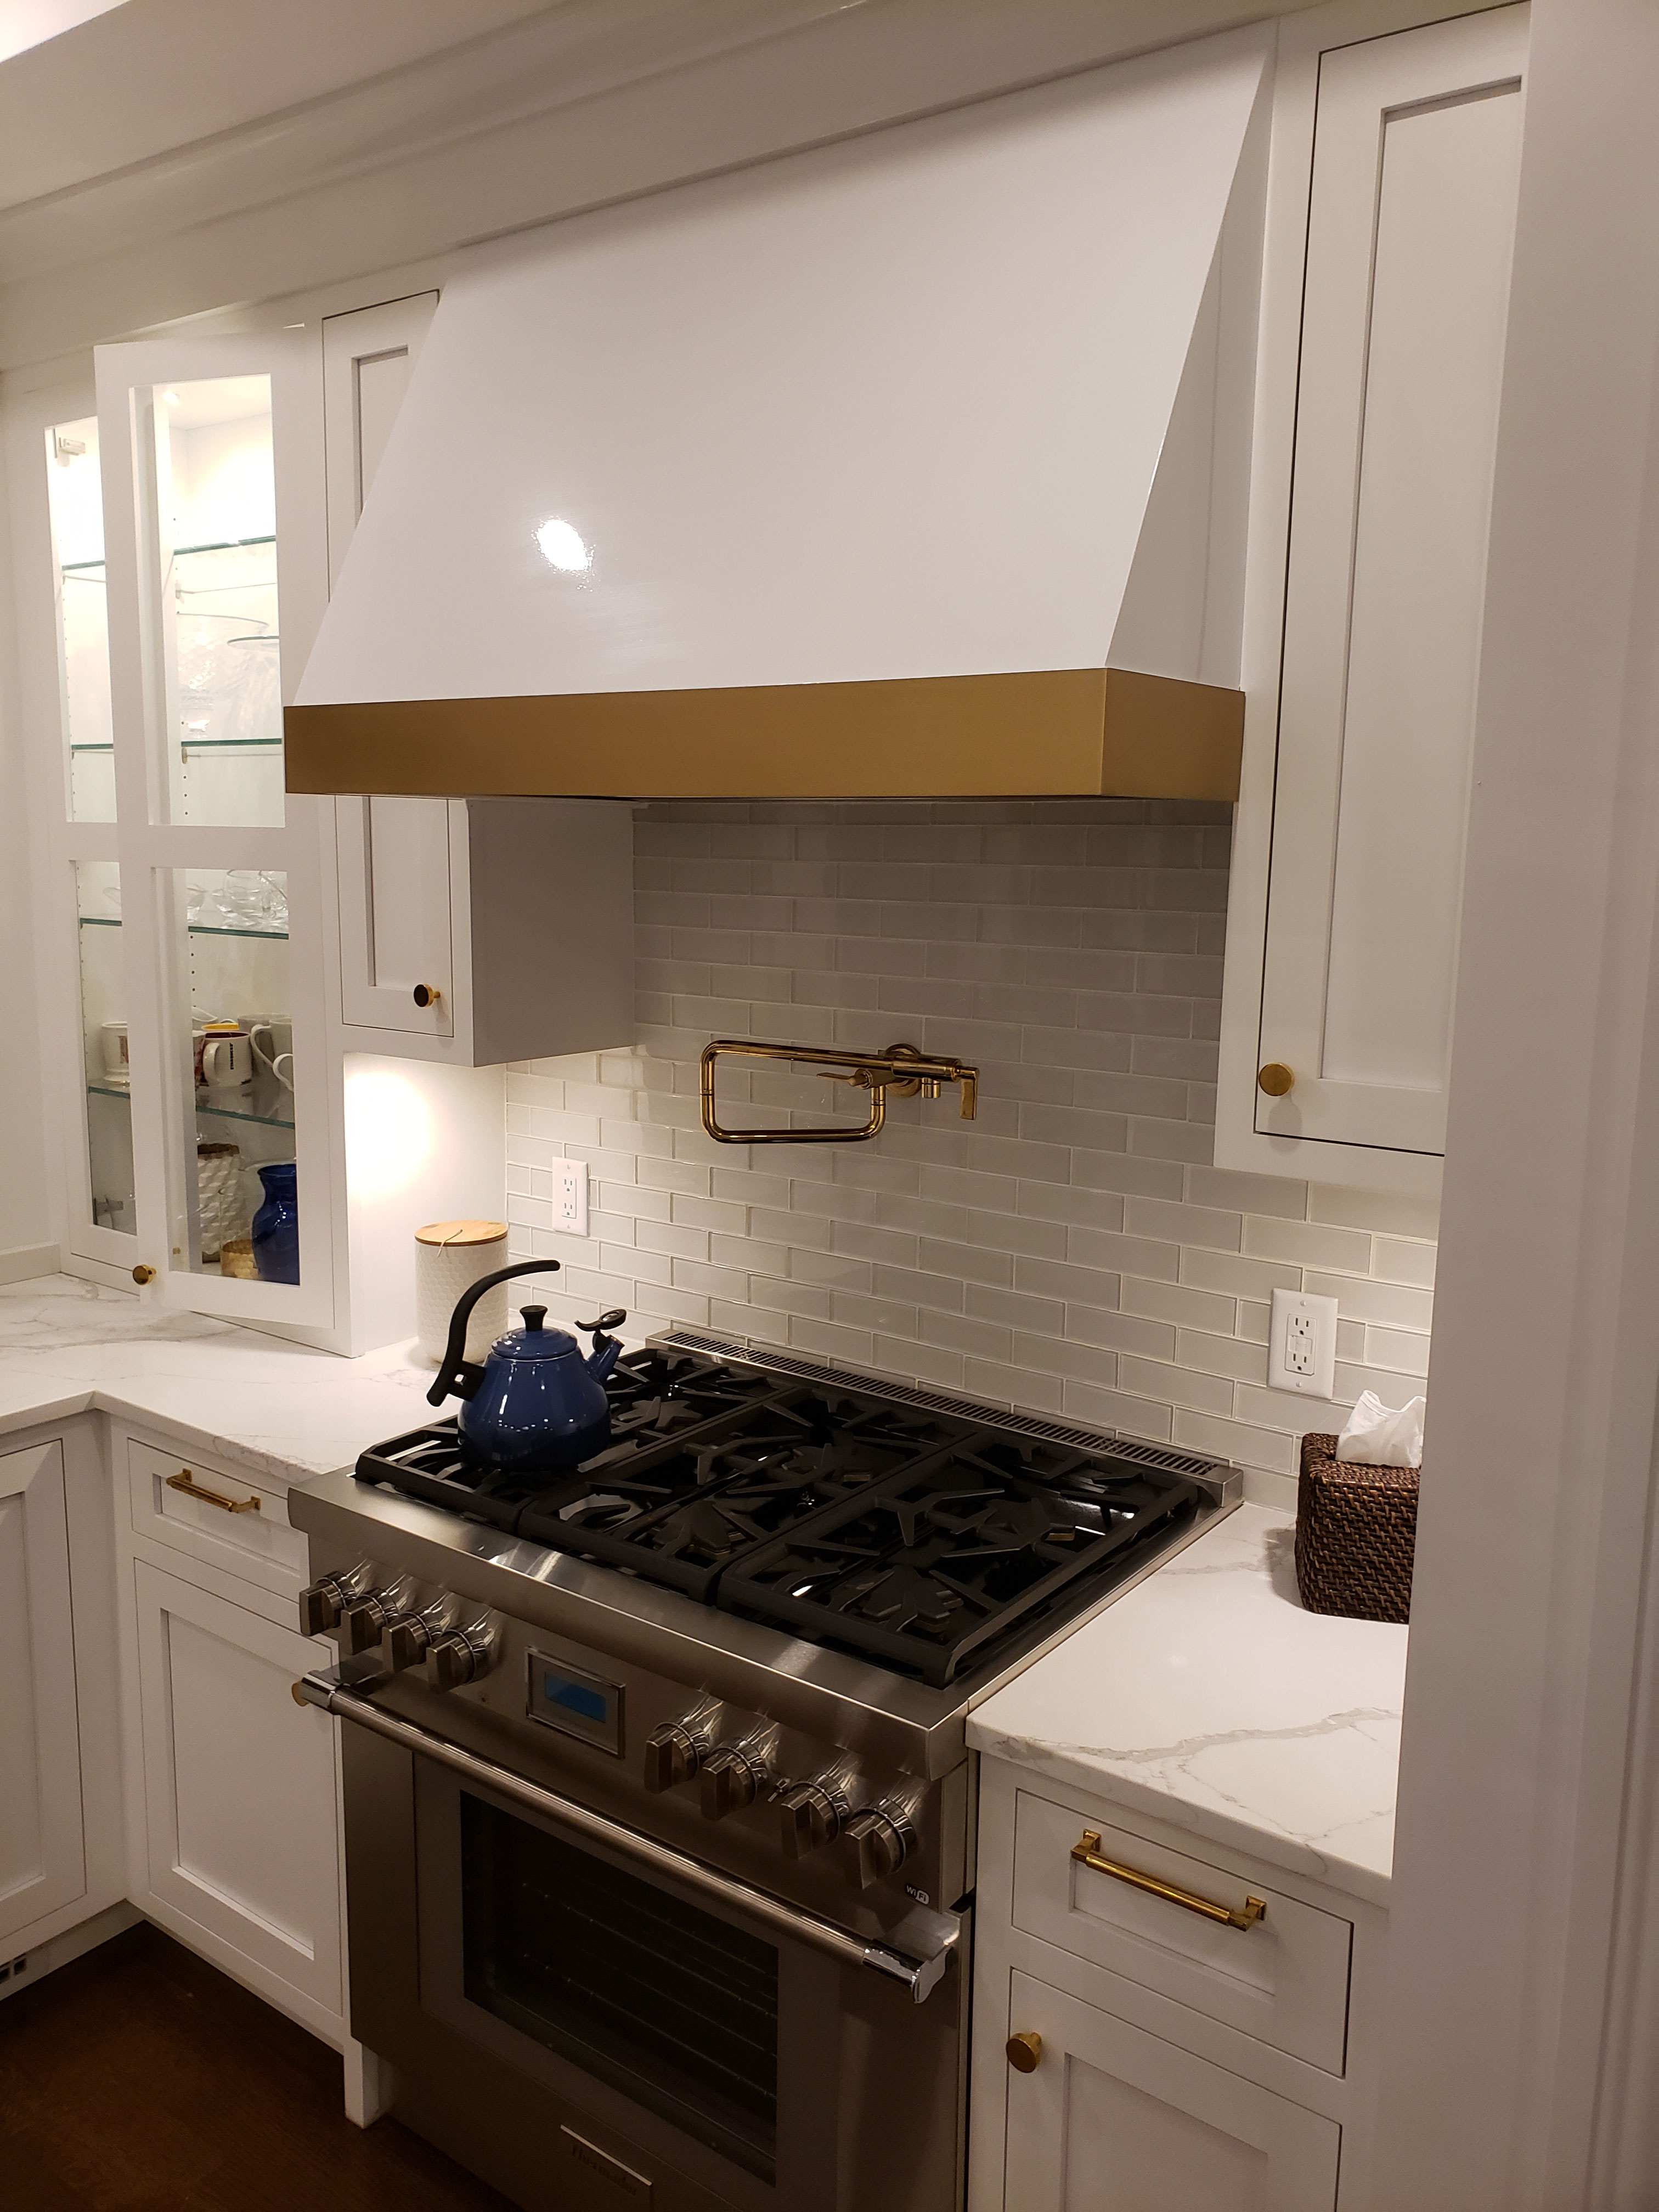 Beautiful cottage kitchen idea with stylish range hood, white kitchen cabinets and countertops, marble backsplash